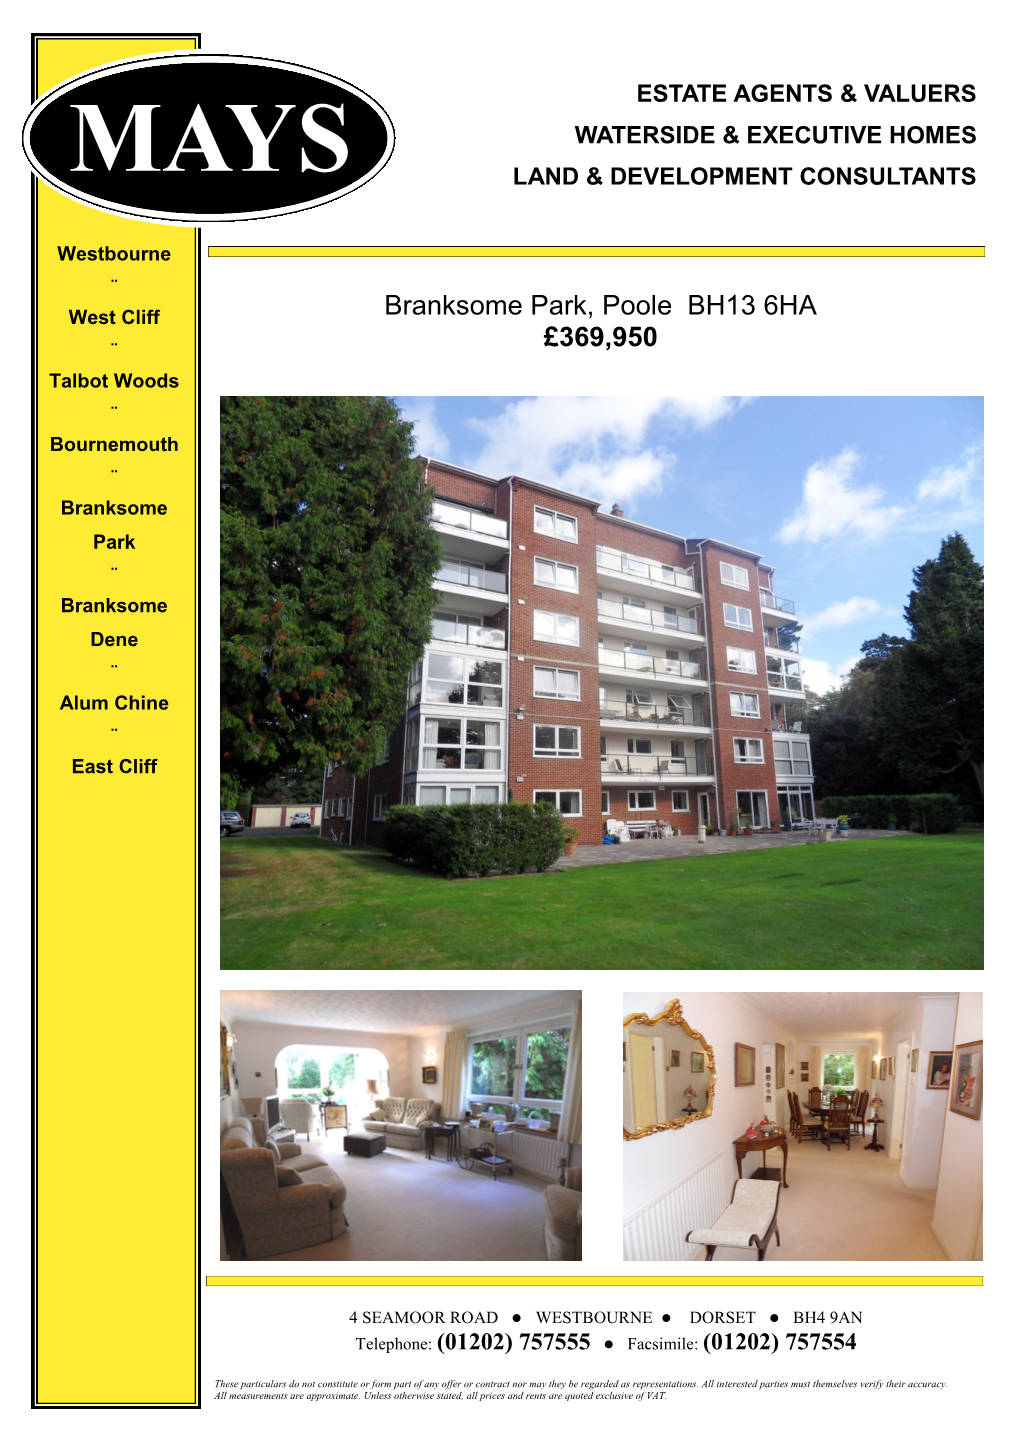 Branksome Park, Poole BH13 6HA £369,950